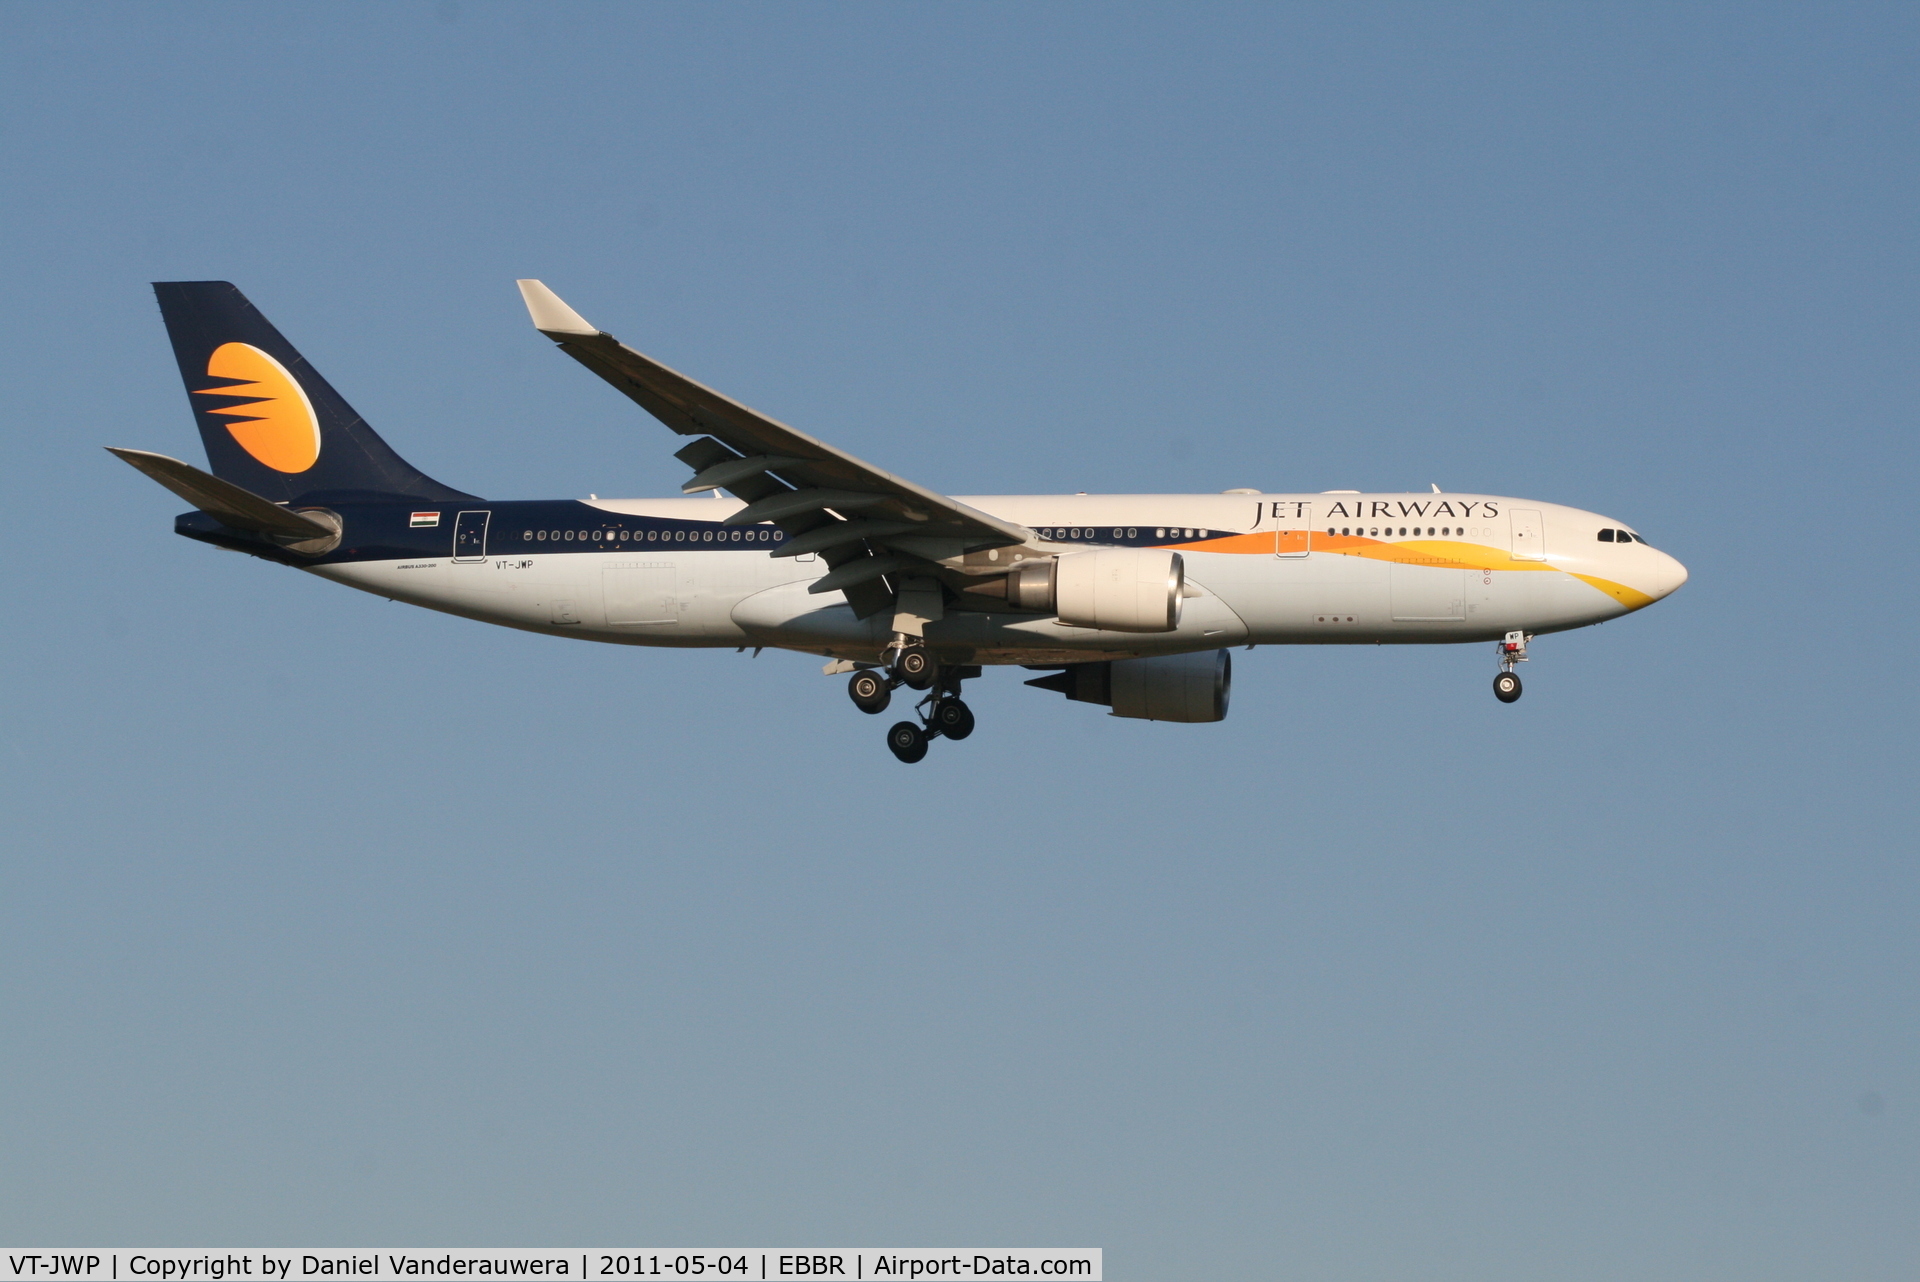 VT-JWP, 2008 Airbus A330-202 C/N 947, Flight 9W227 is descending to RWY 02